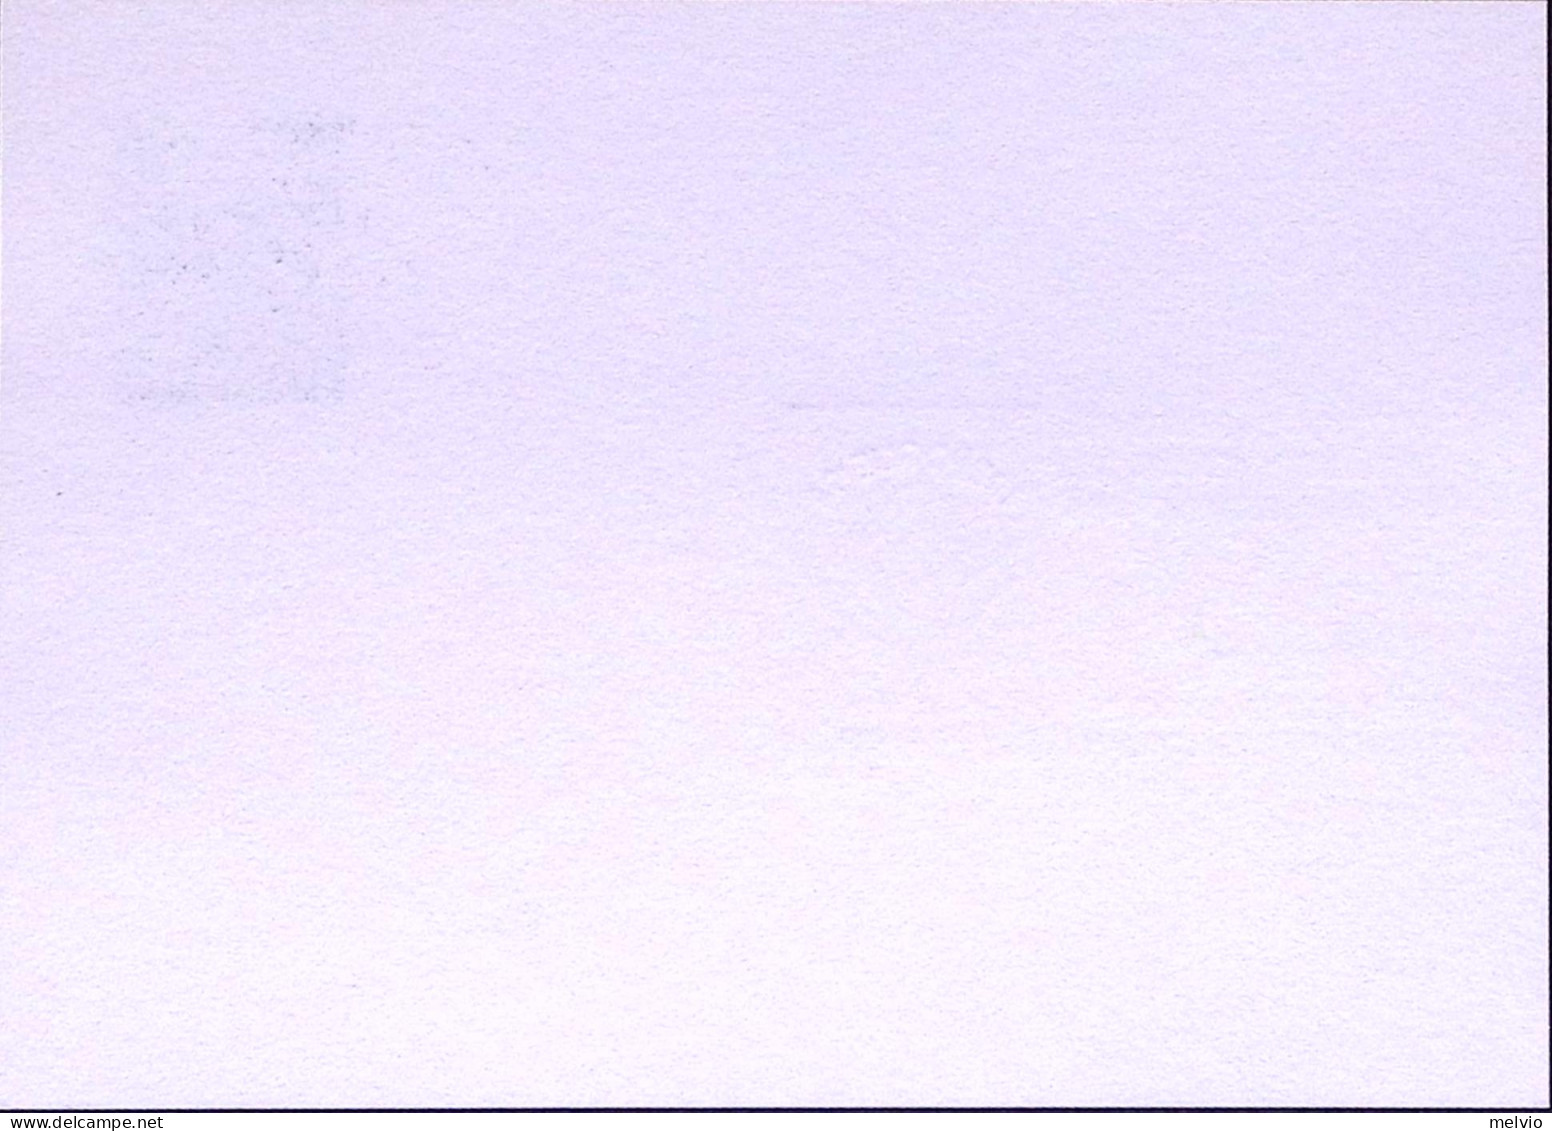 1994-AGESCI DOMUS MARIAE Cartolina Postale, Catelli Lire 700 Soprastampata I.P.Z - Ganzsachen